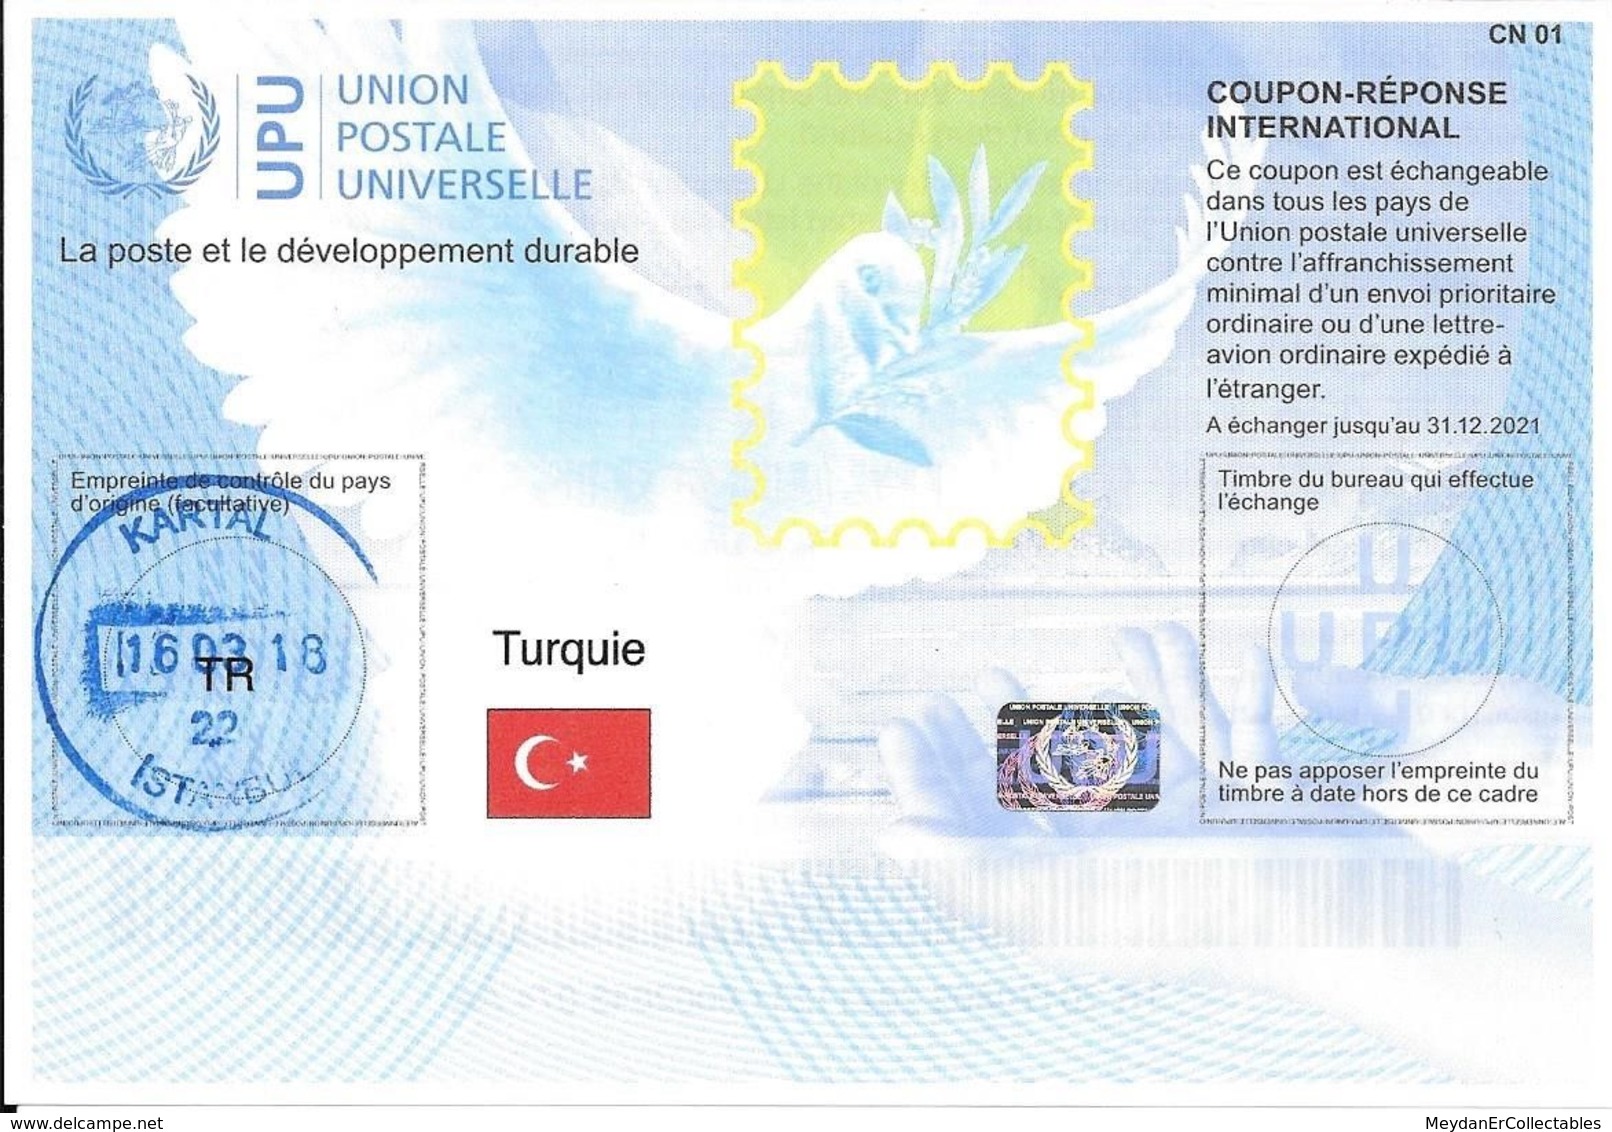 TURKEY - (IRC) INTERNATIONAL REPLY COUPON (exp. 31.12.2021) (POSTMARKED), MNH - Ganzsachen